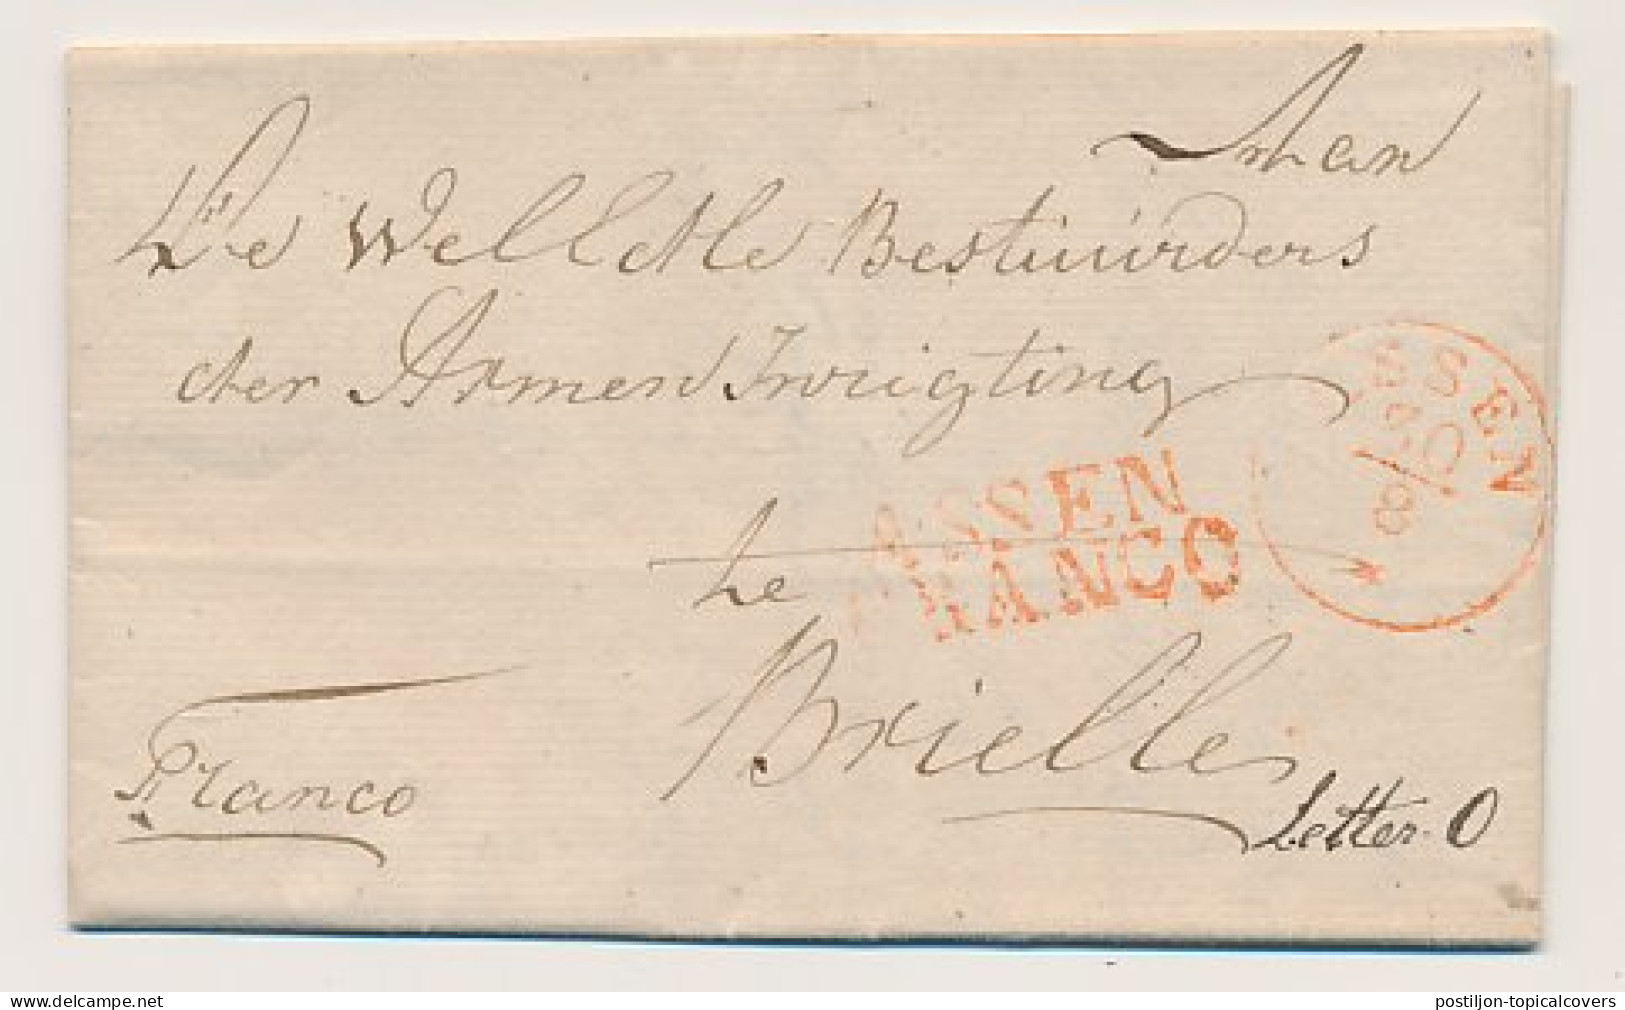 Veenhuizen - ASSEN FRANCO - Brielle 1843 - PEP Onbekend - ...-1852 Prephilately